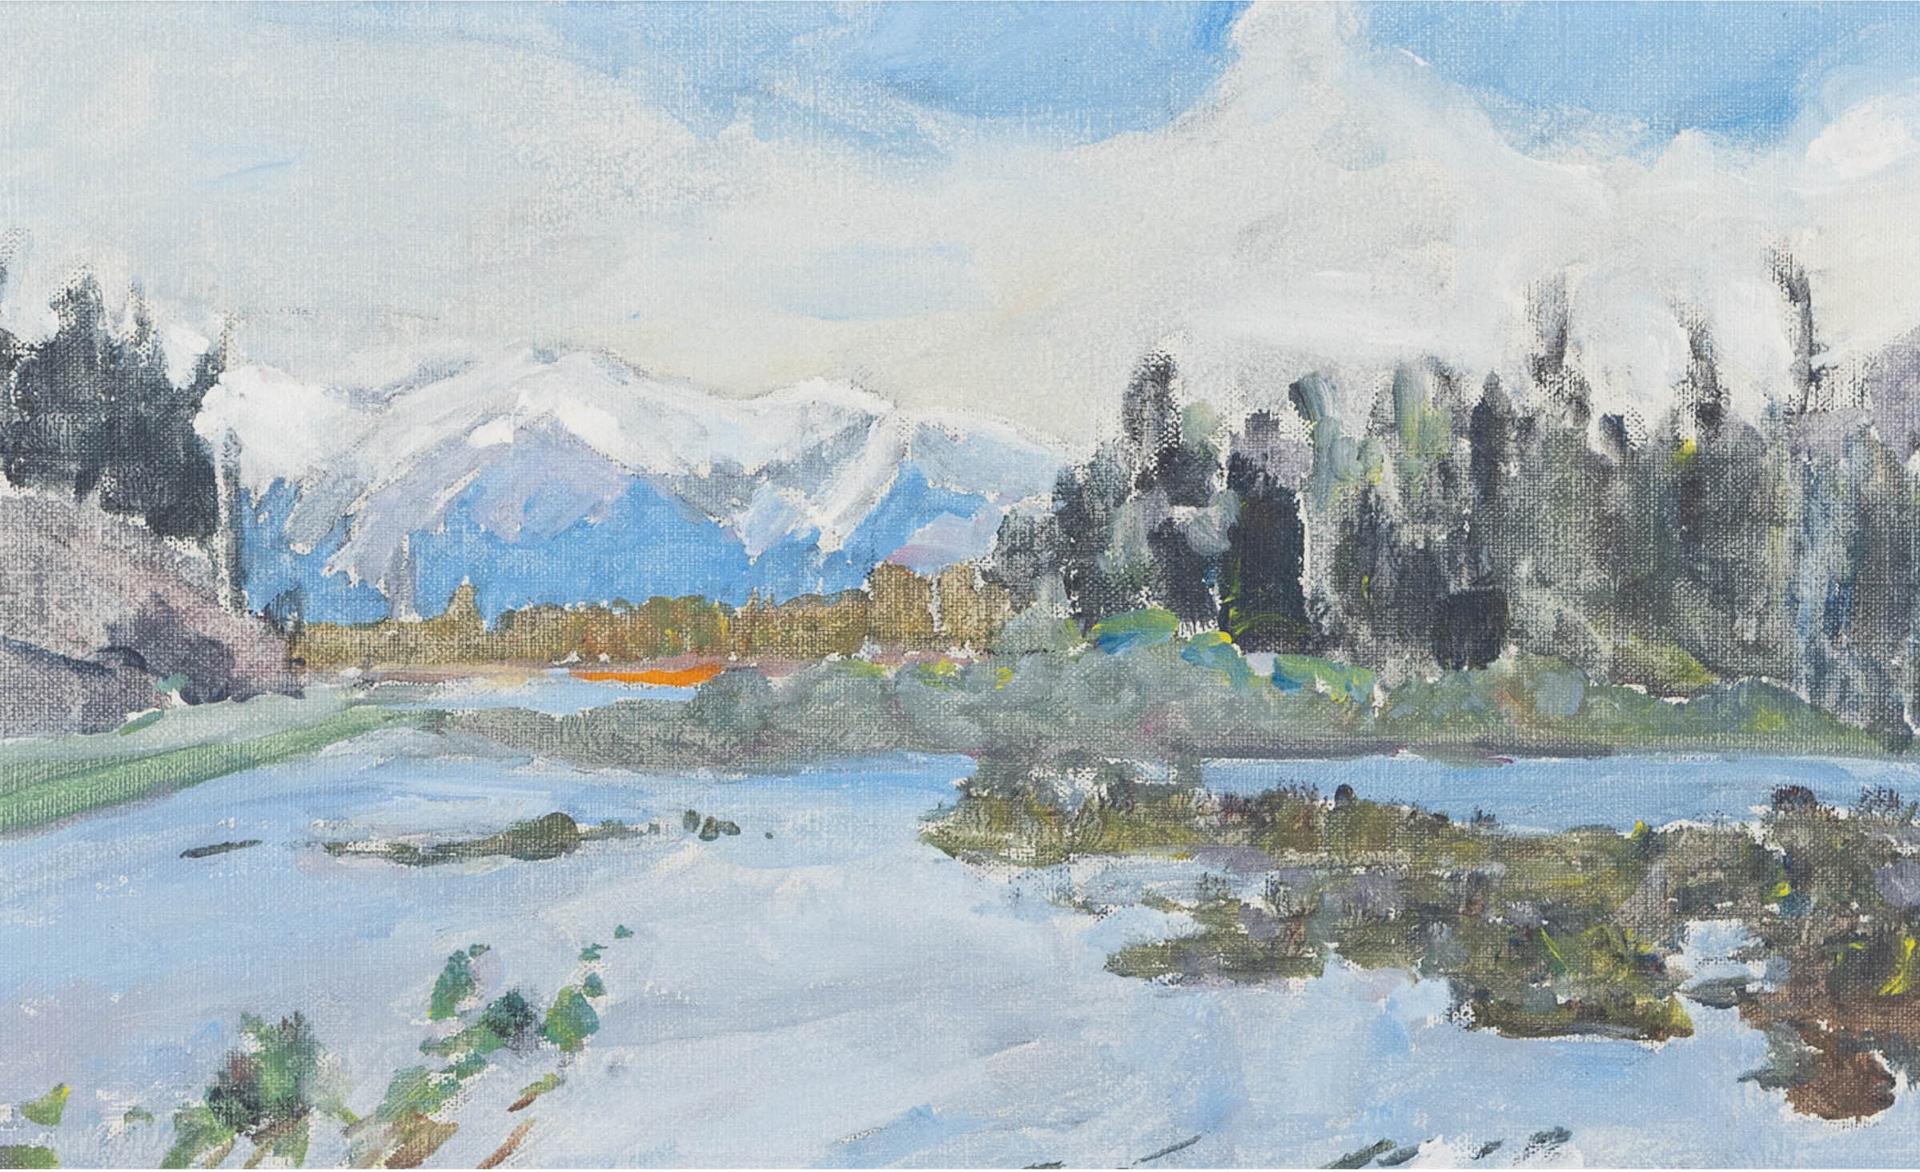 Dorothy Elsie Knowles (1927-2001) - Solitude - Fairholm Range With Vermillion Lake In Foreground, 1982